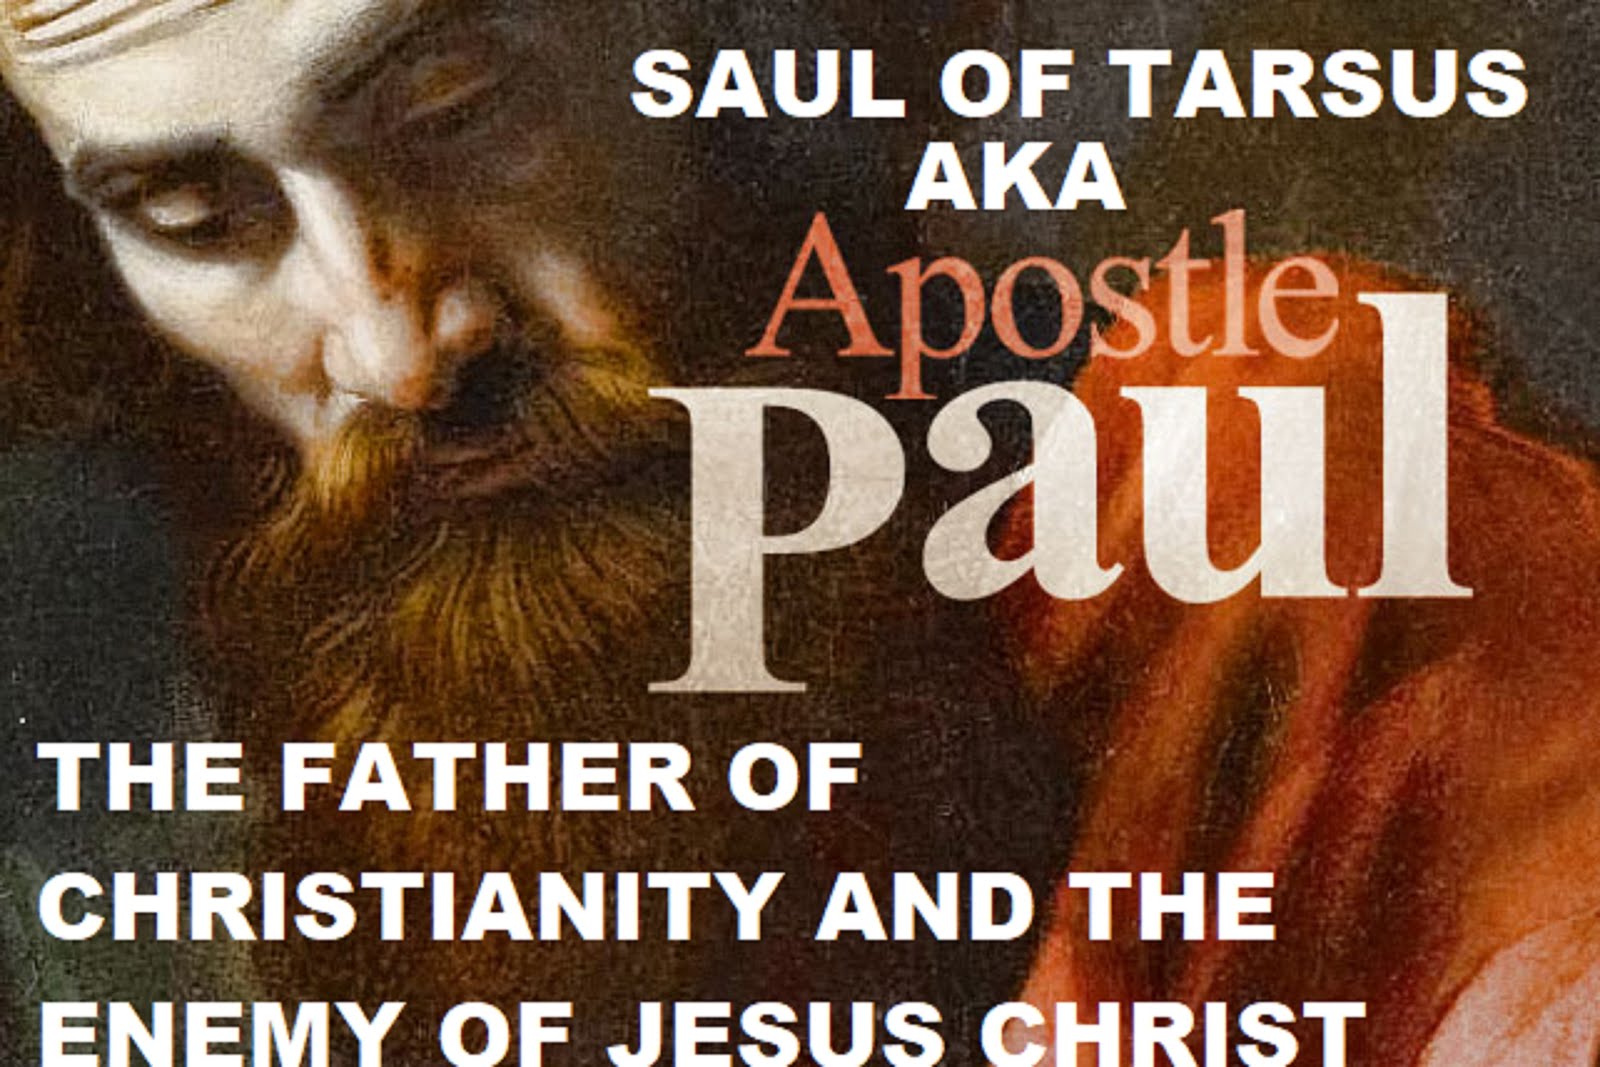 SAUL OF TARSUS AKA APOSTLE PAUL